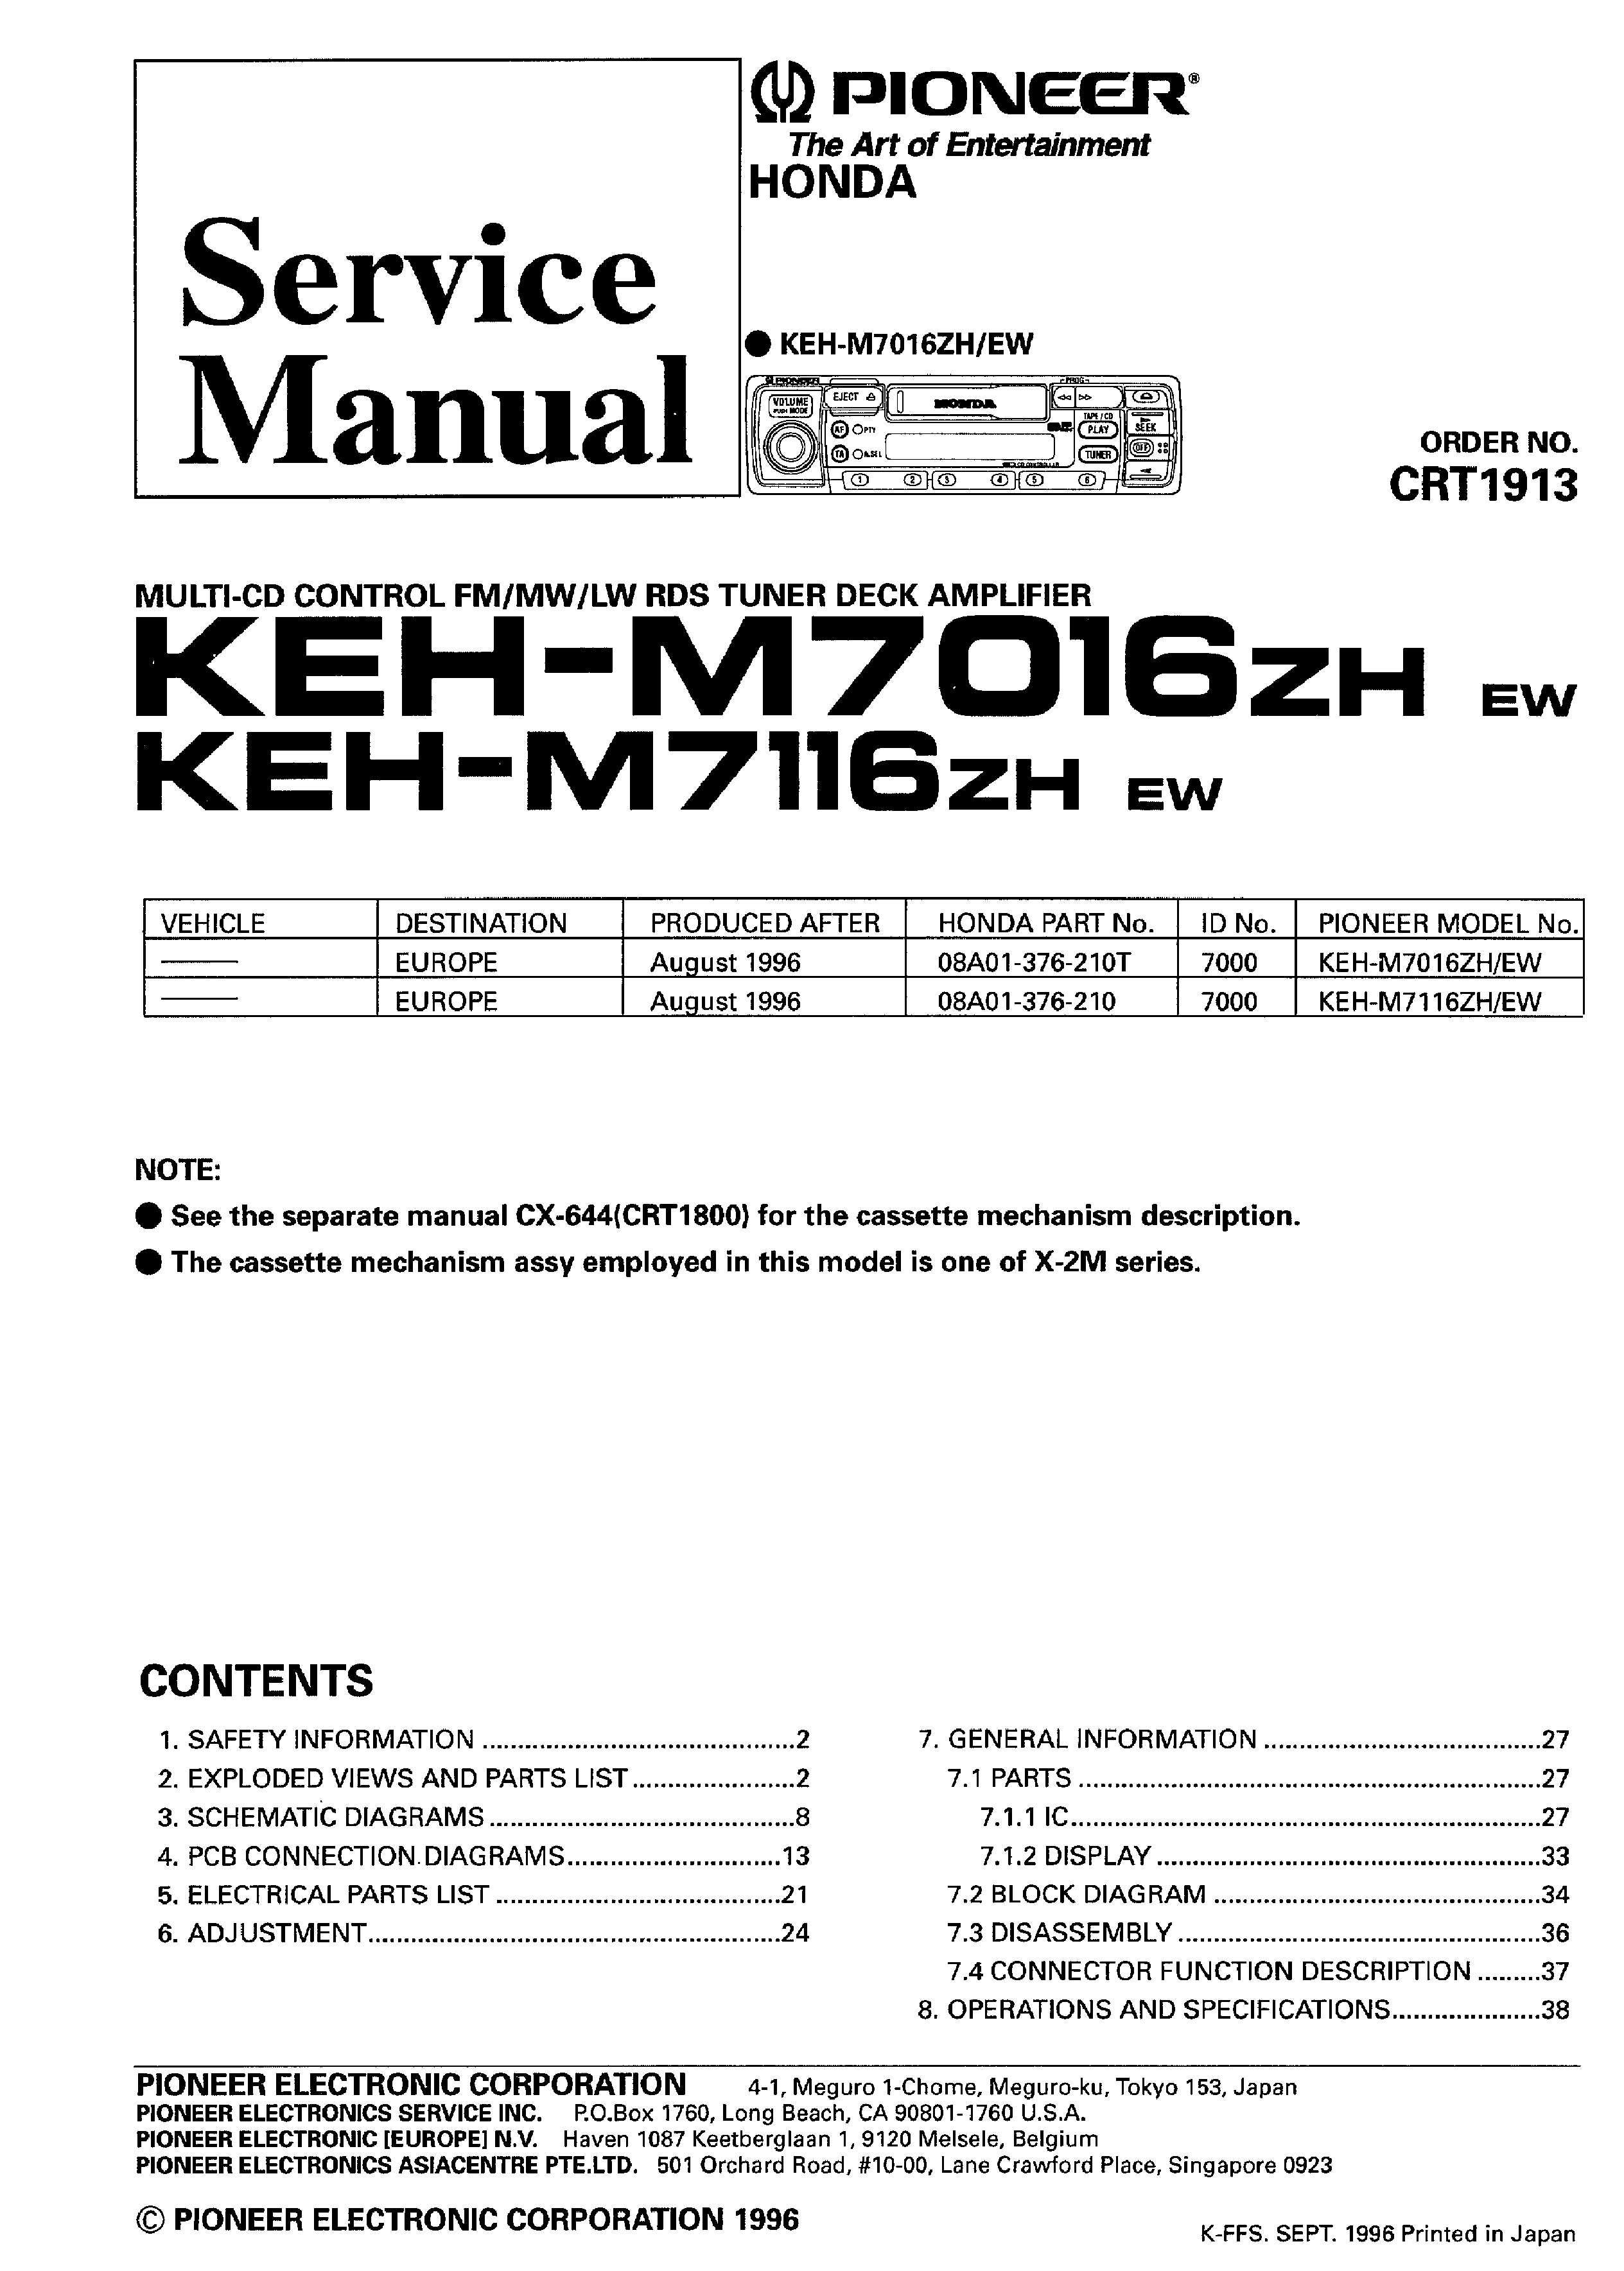 ew-36 service manual